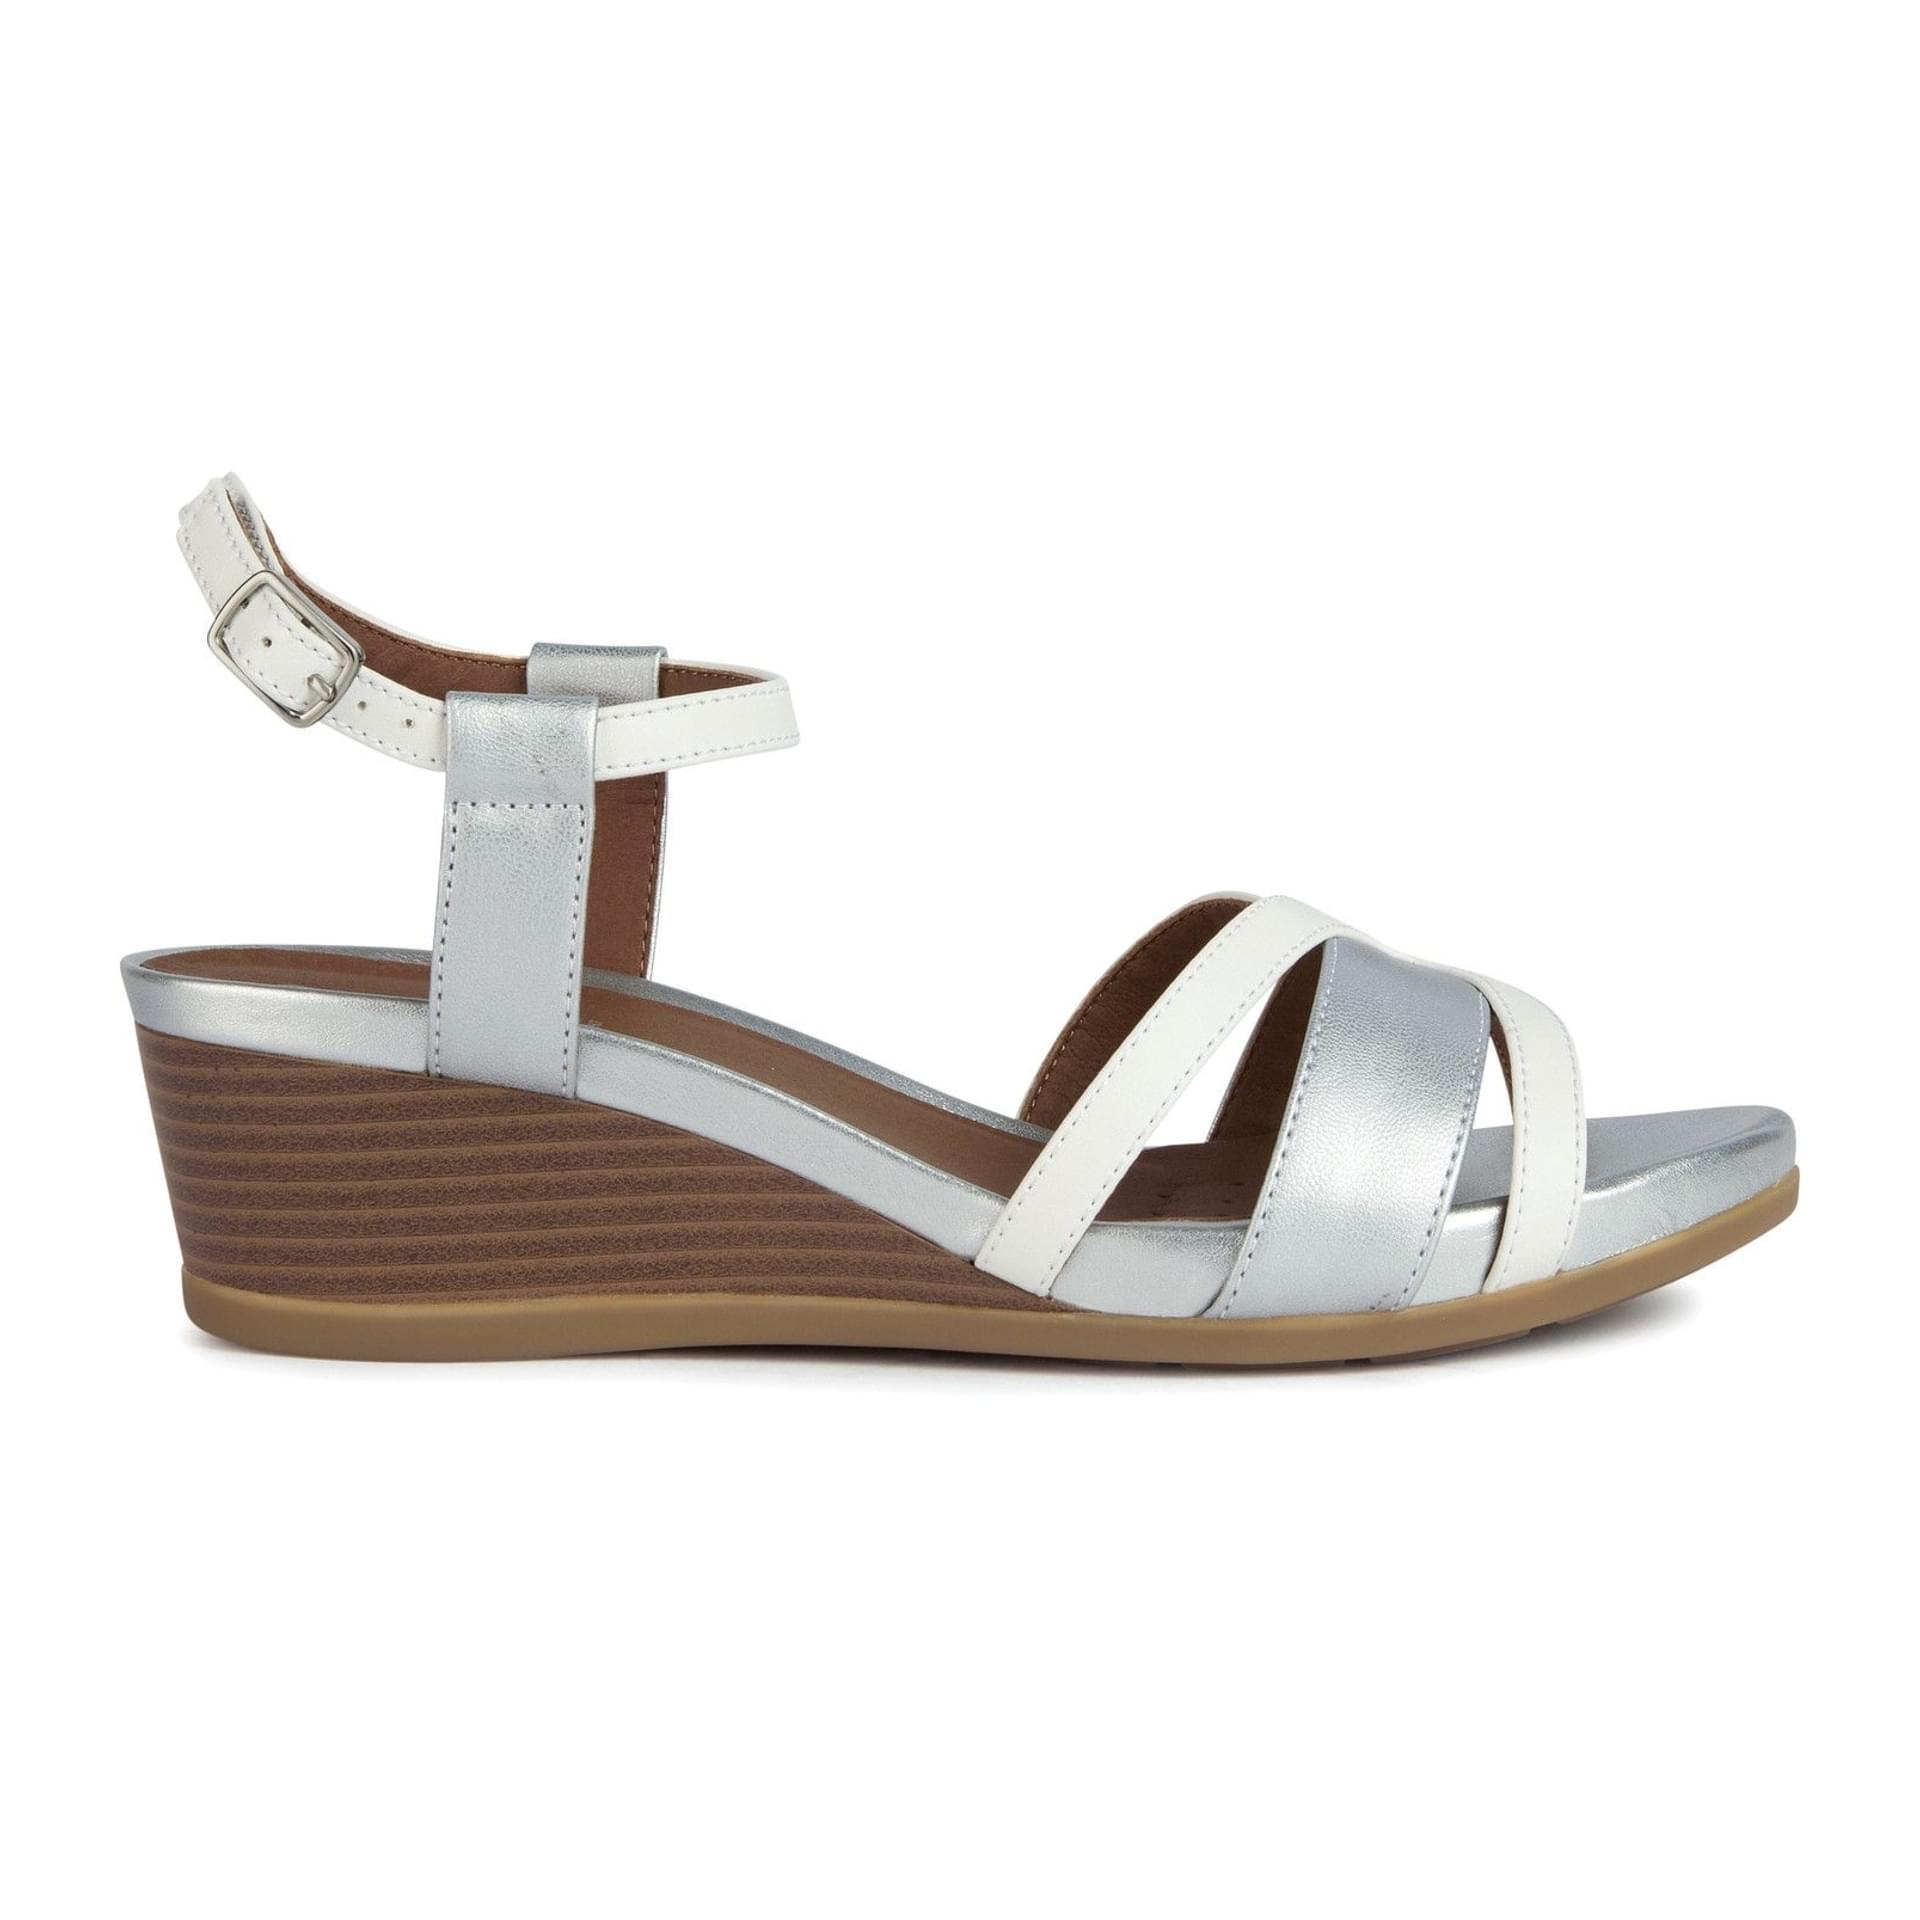 Geox Sandals, Women, 35-41, White/Silver